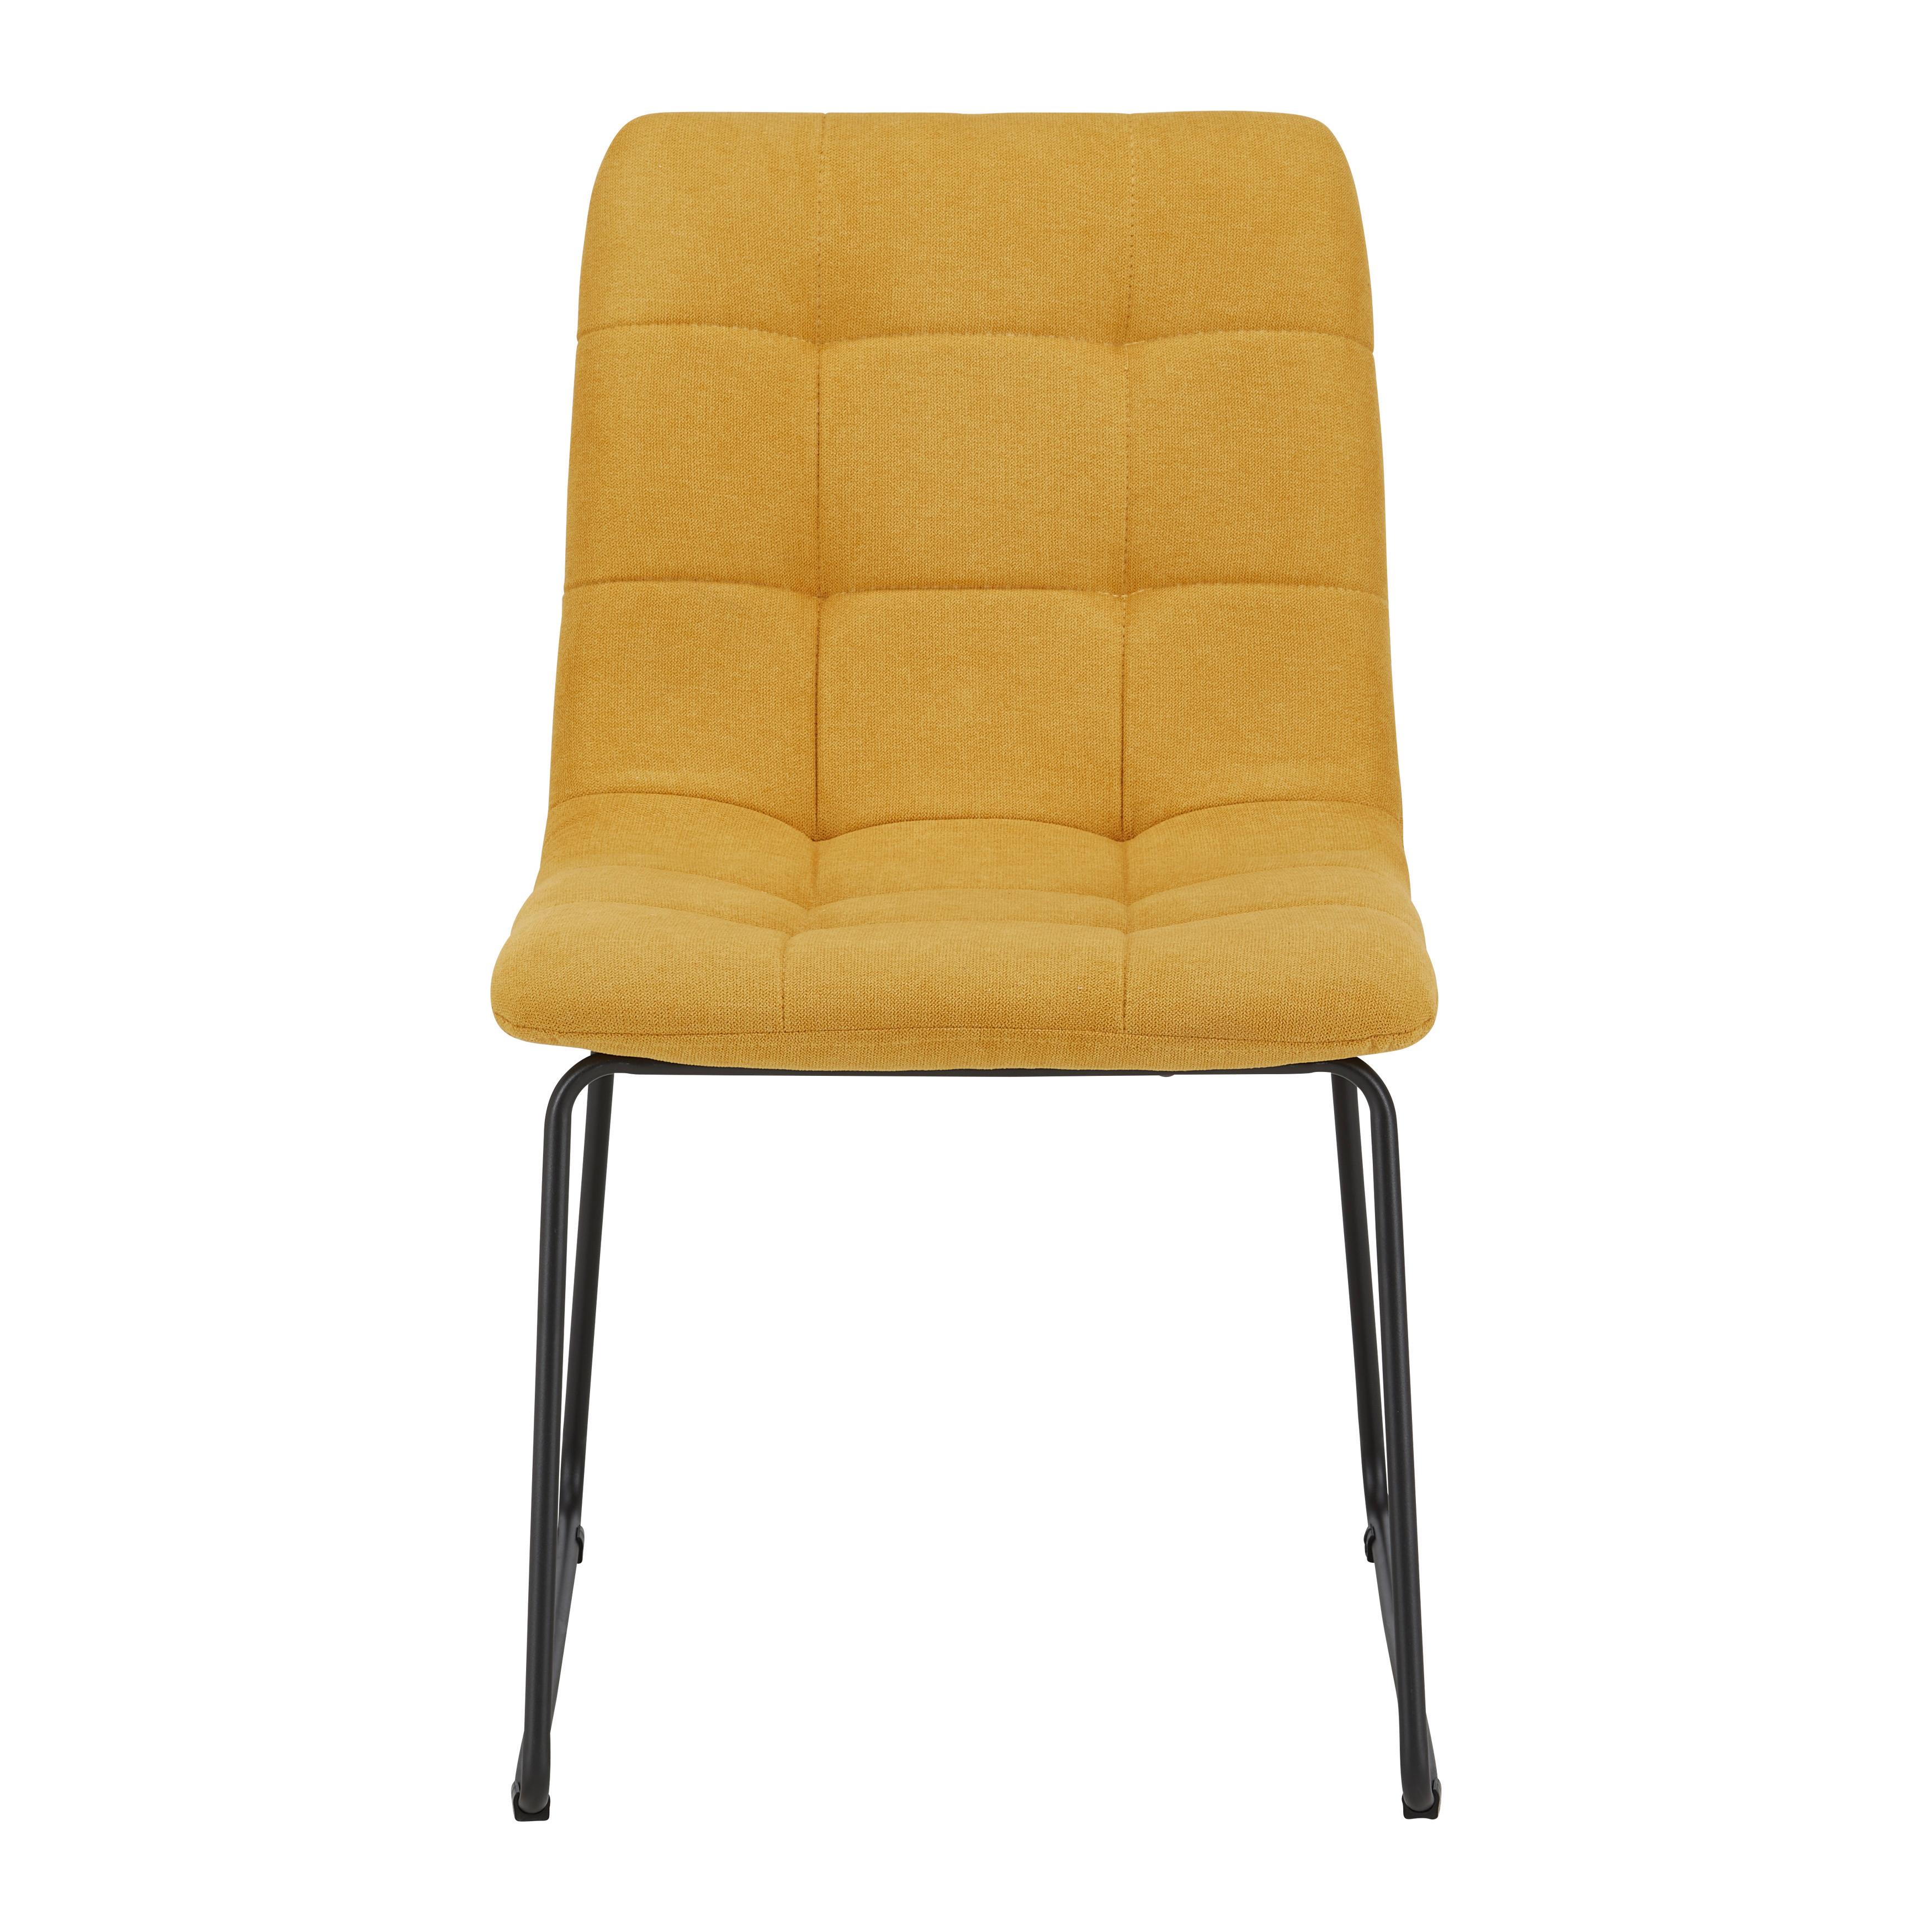 Stuhl "Mia", Webstoff, gelb, Gepolstert - Gelb/Schwarz, MODERN, Textil/Metall (46/82/58cm) - Bessagi Home